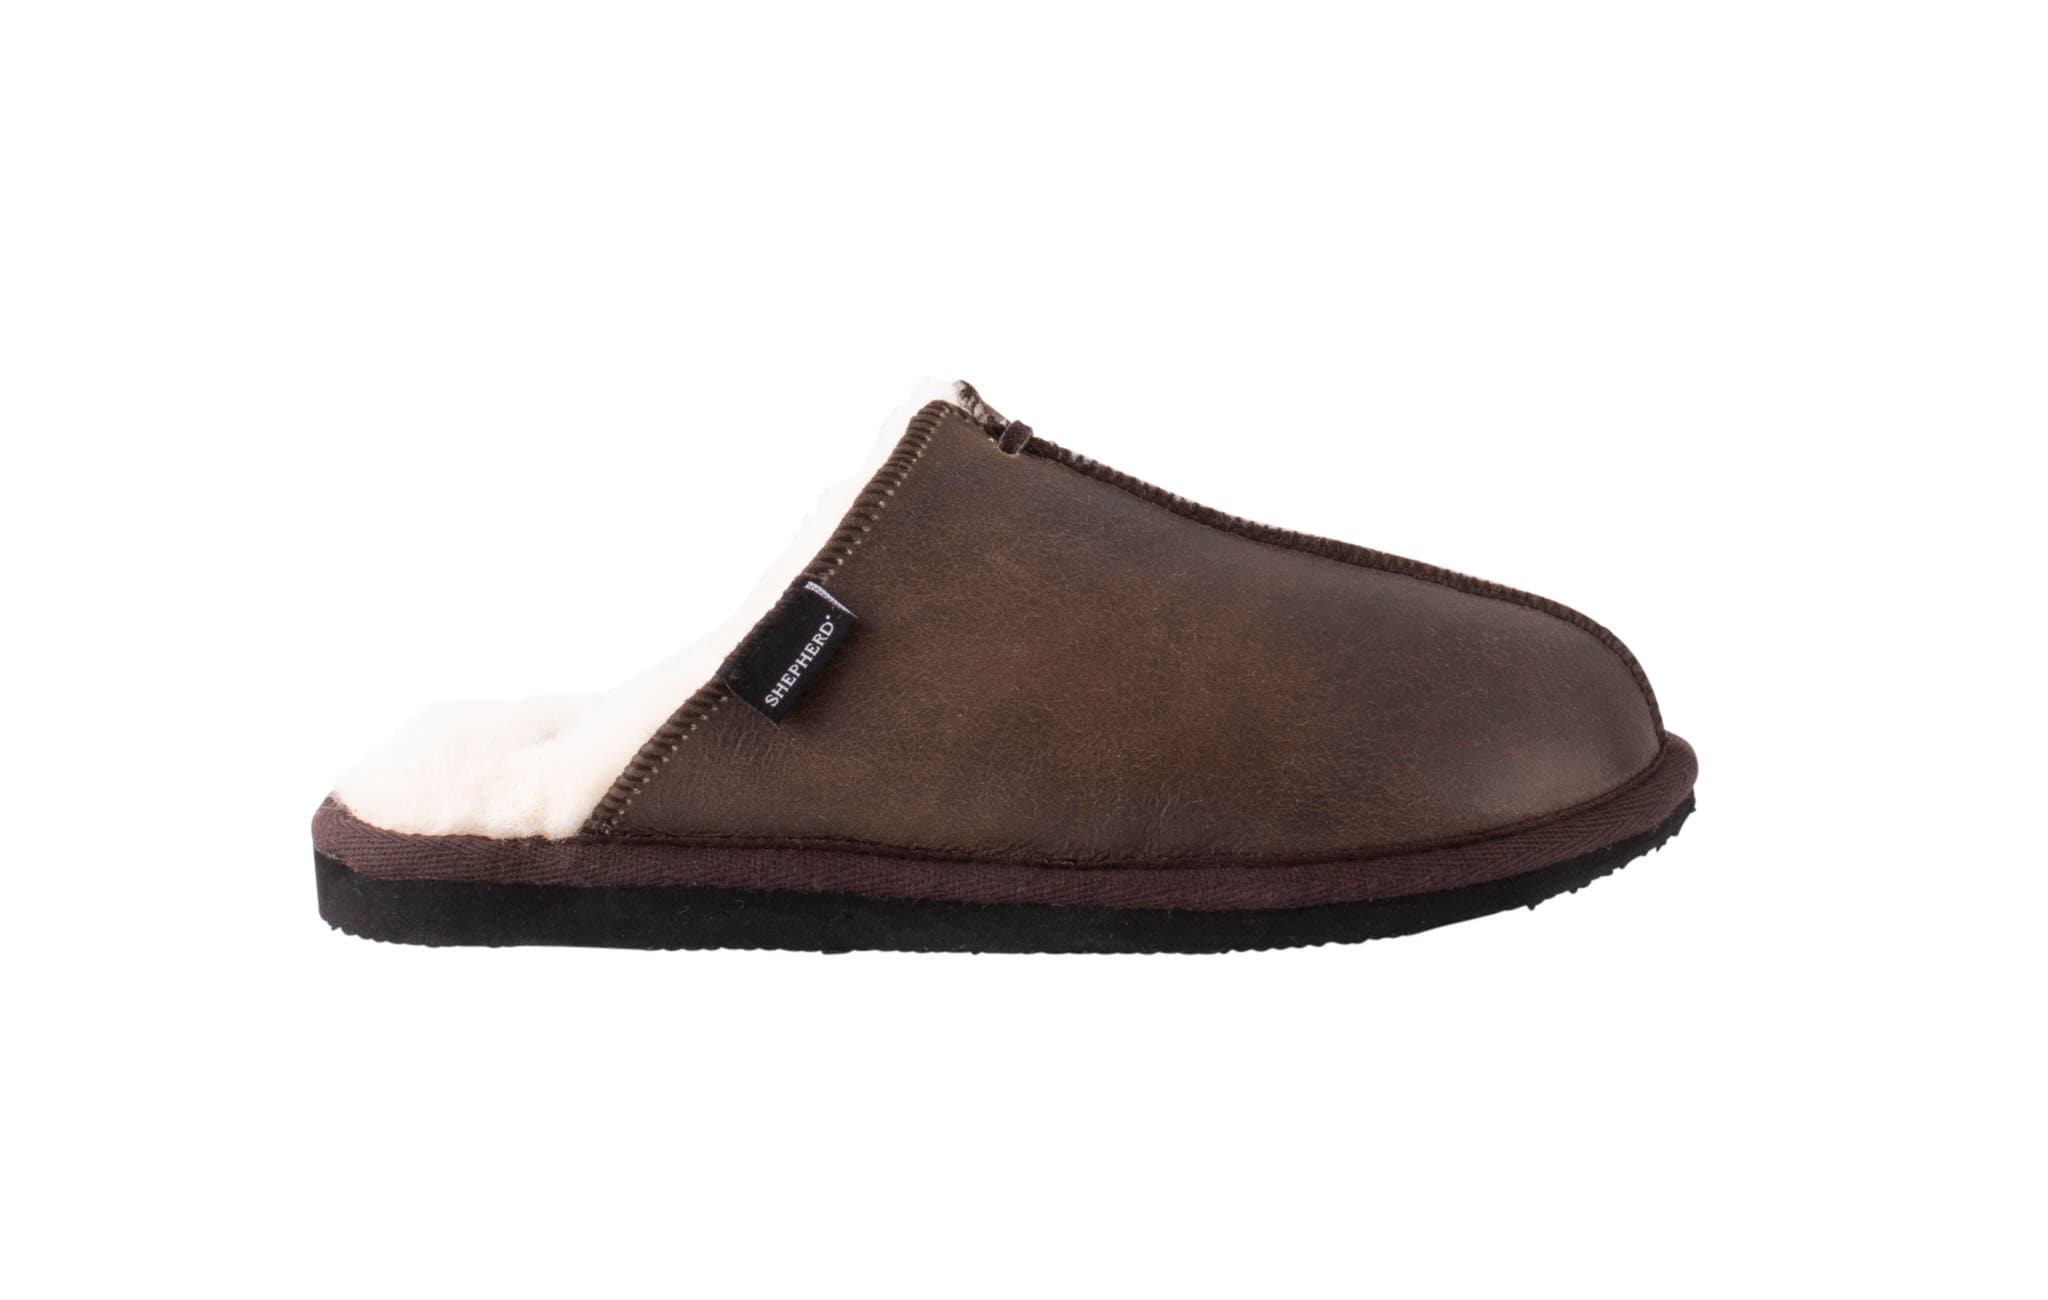 Shepherd Hugo. Warm sheepskin slippers for men in a classic slip-in design.